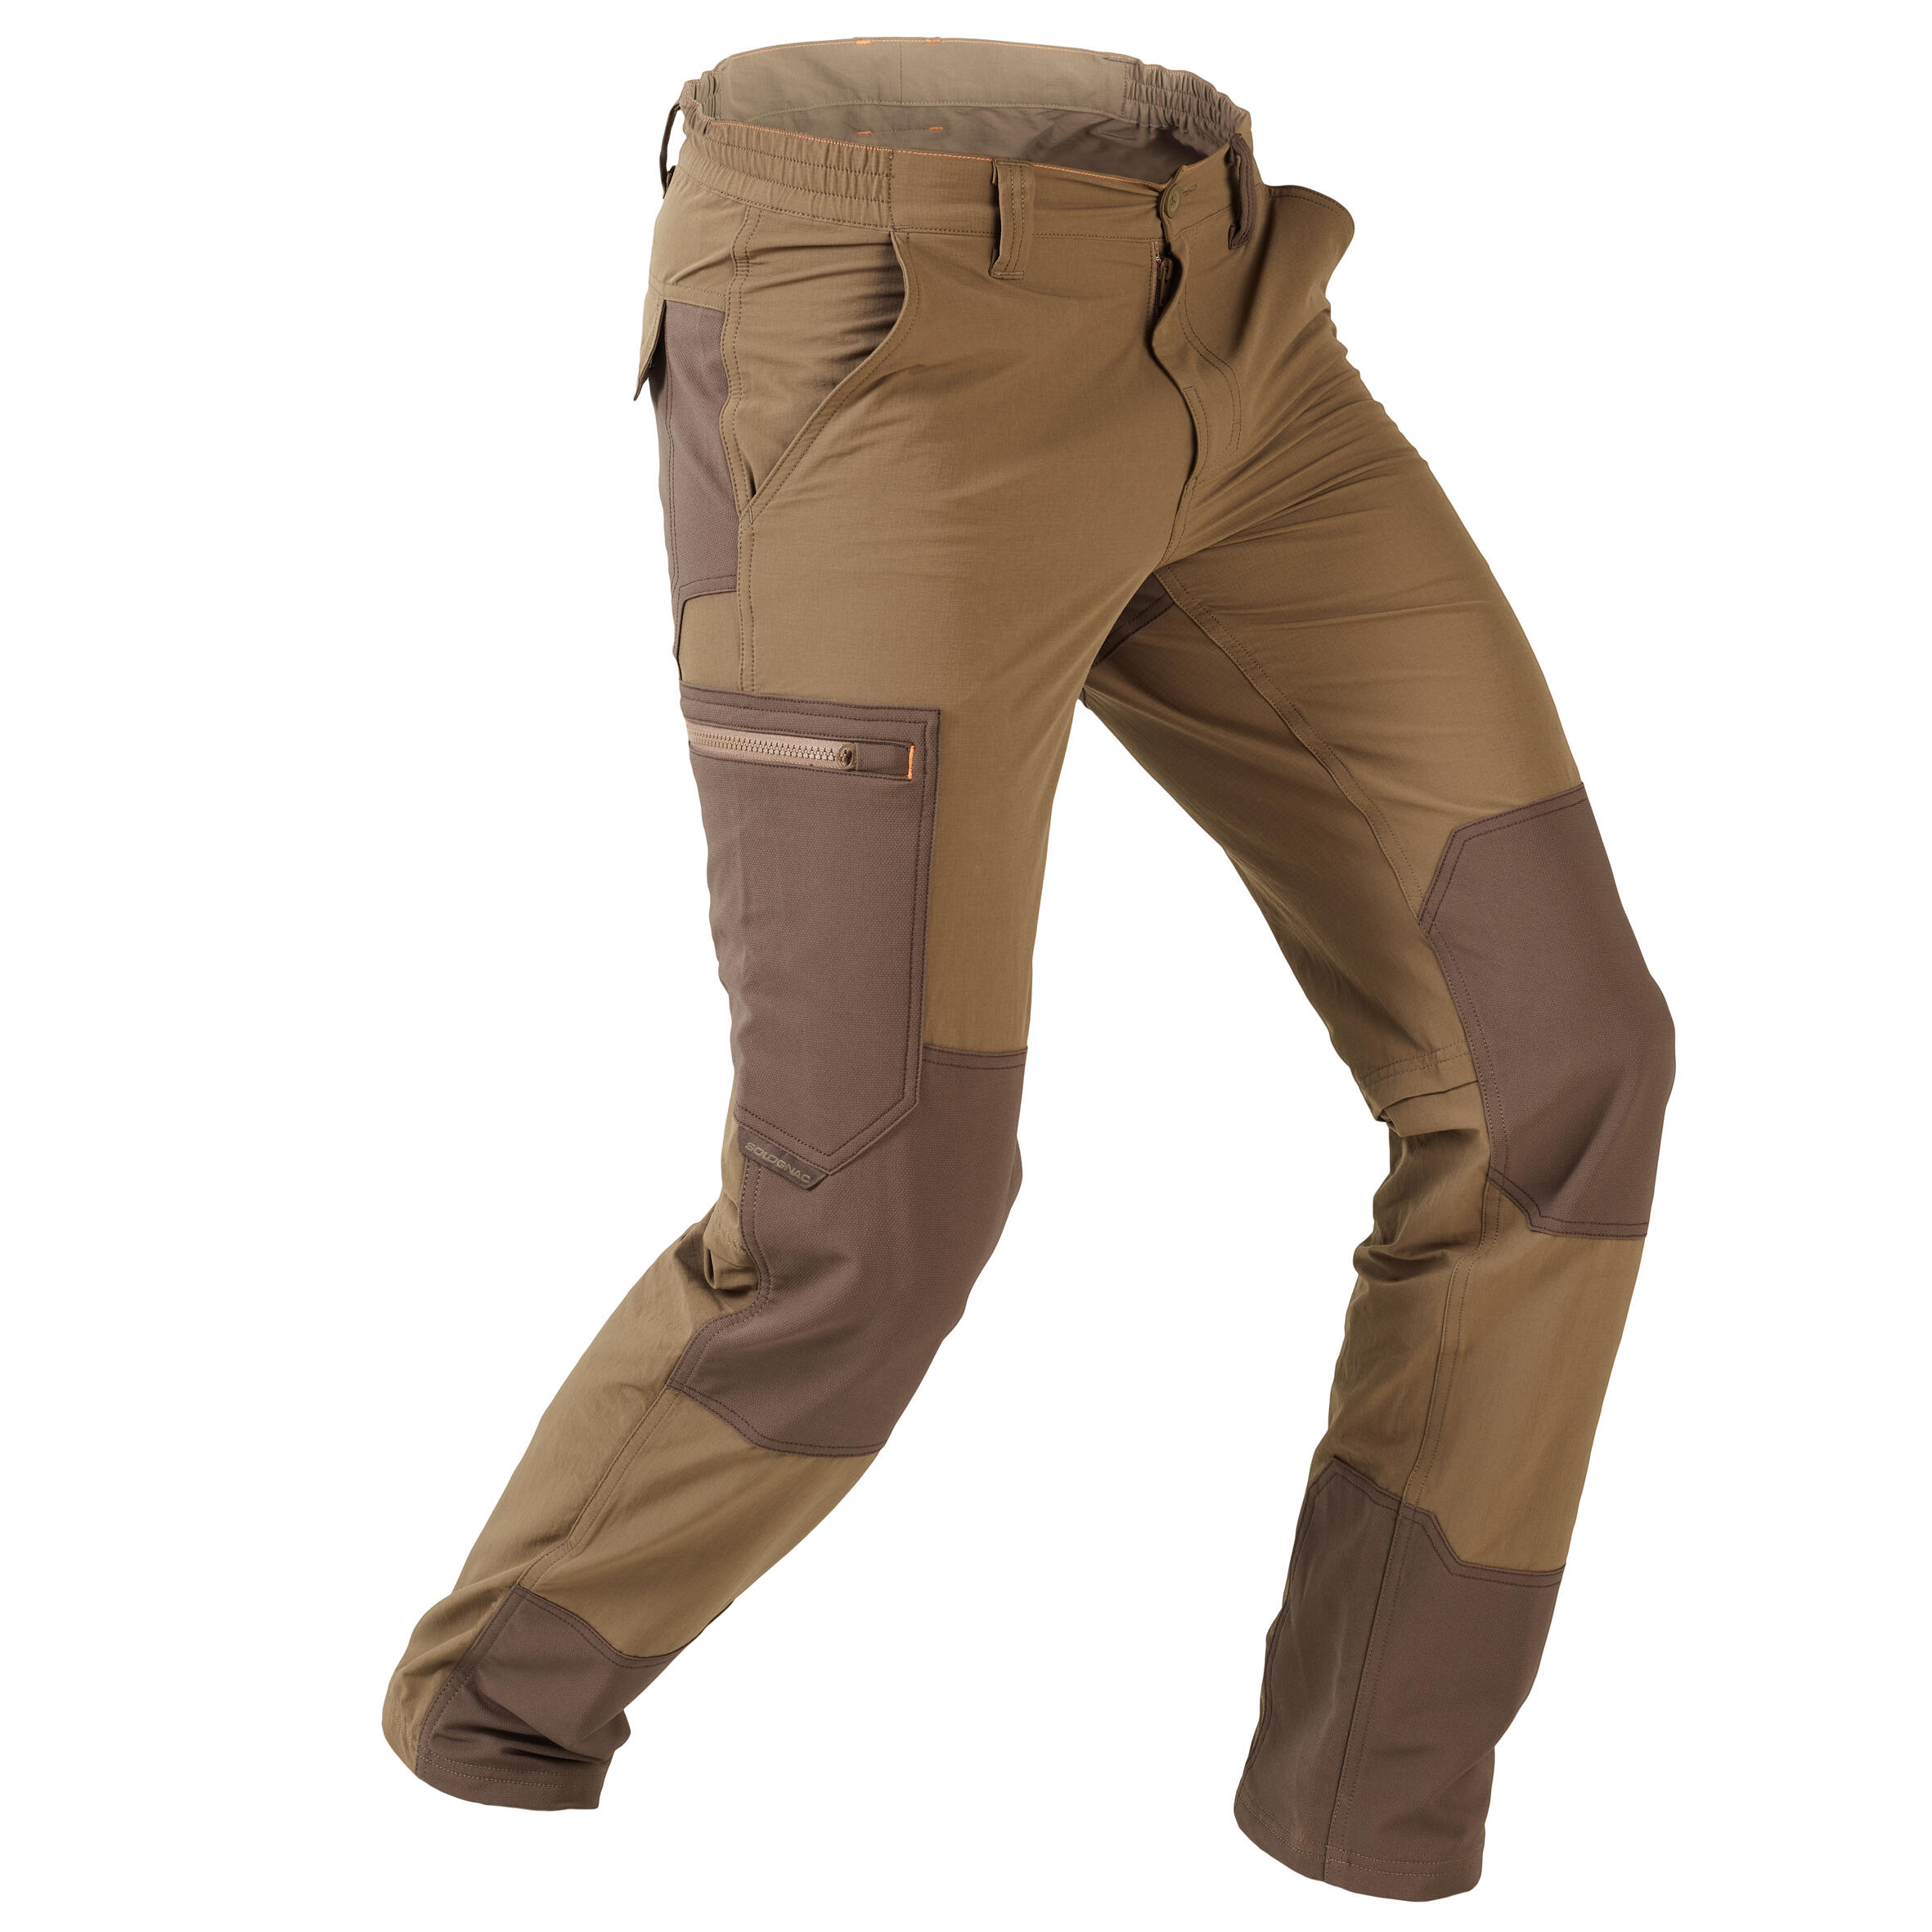 520 Cargo Pants ideas  cargo pants, pants for women, cargo pants